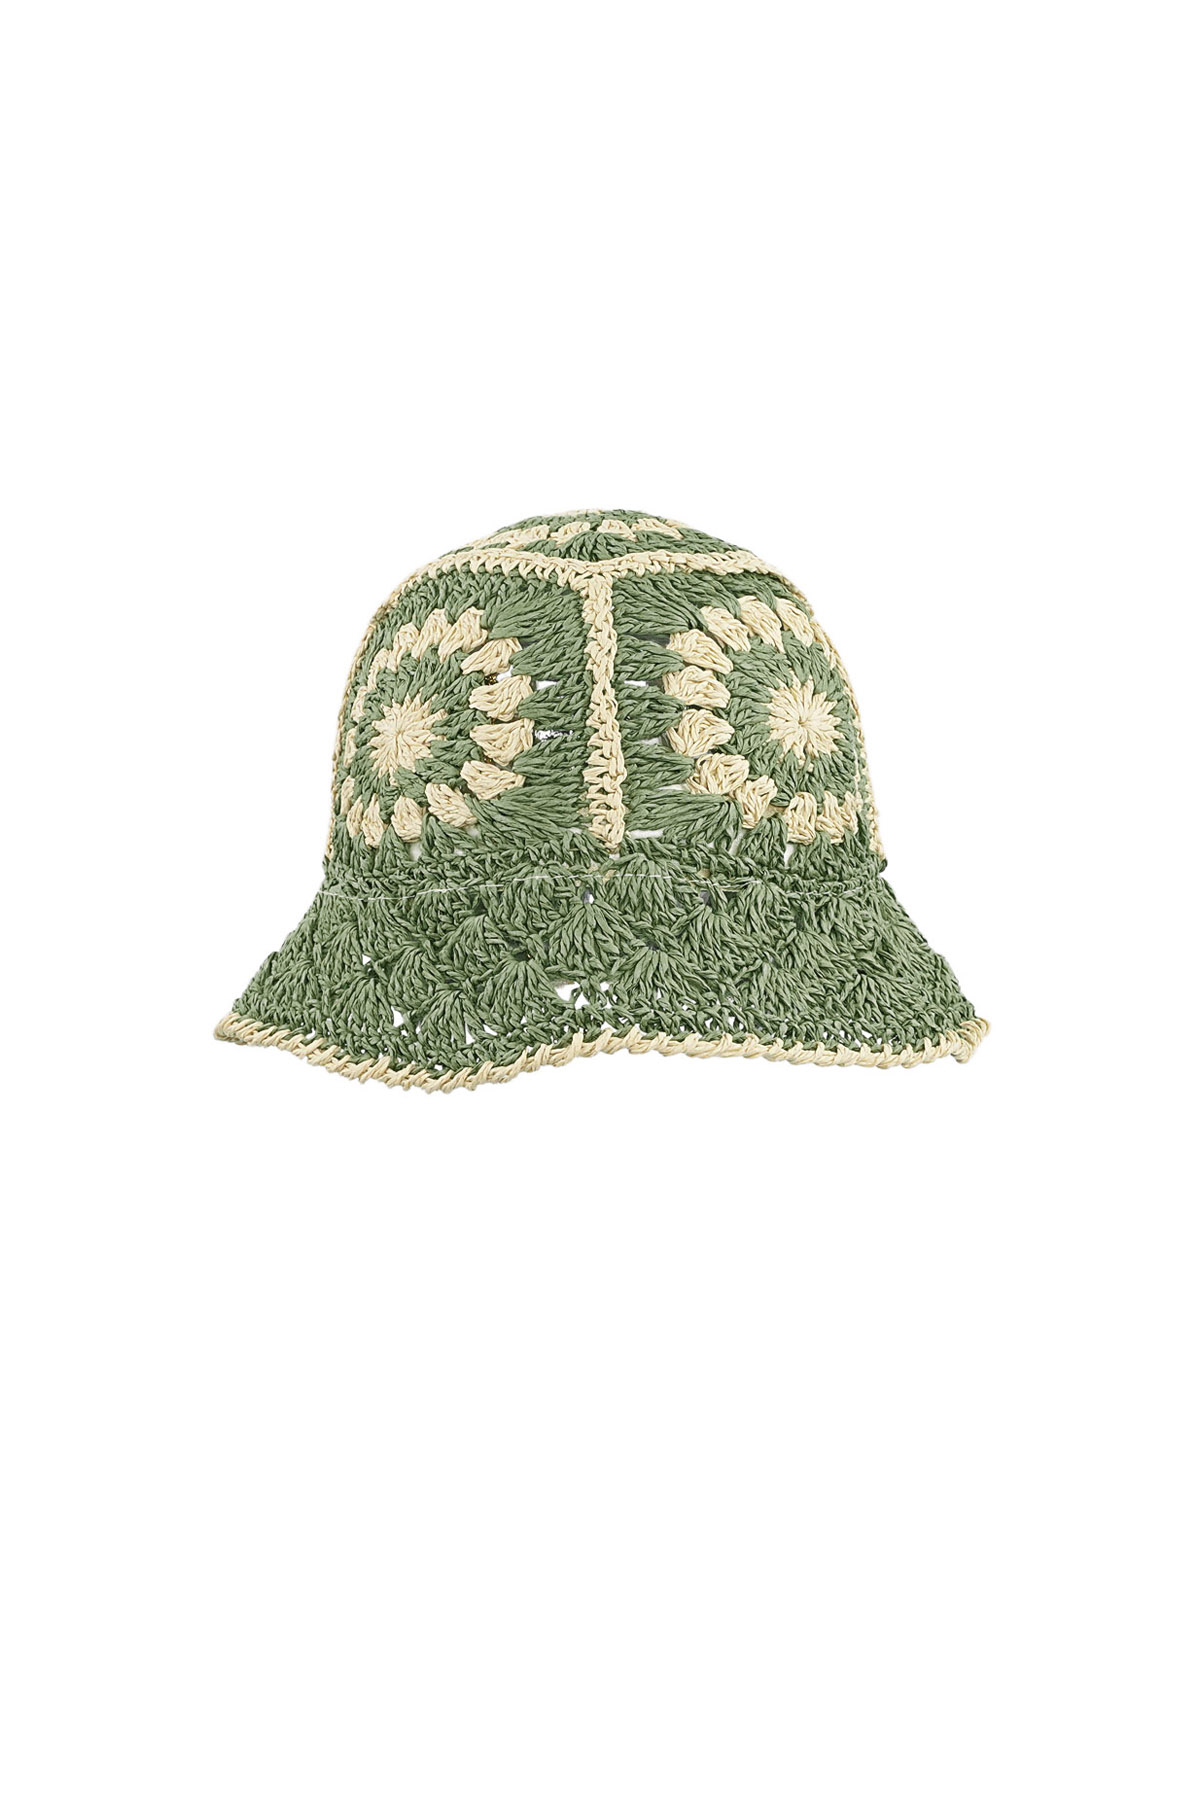 Crochet hat with flowers - dark green h5 